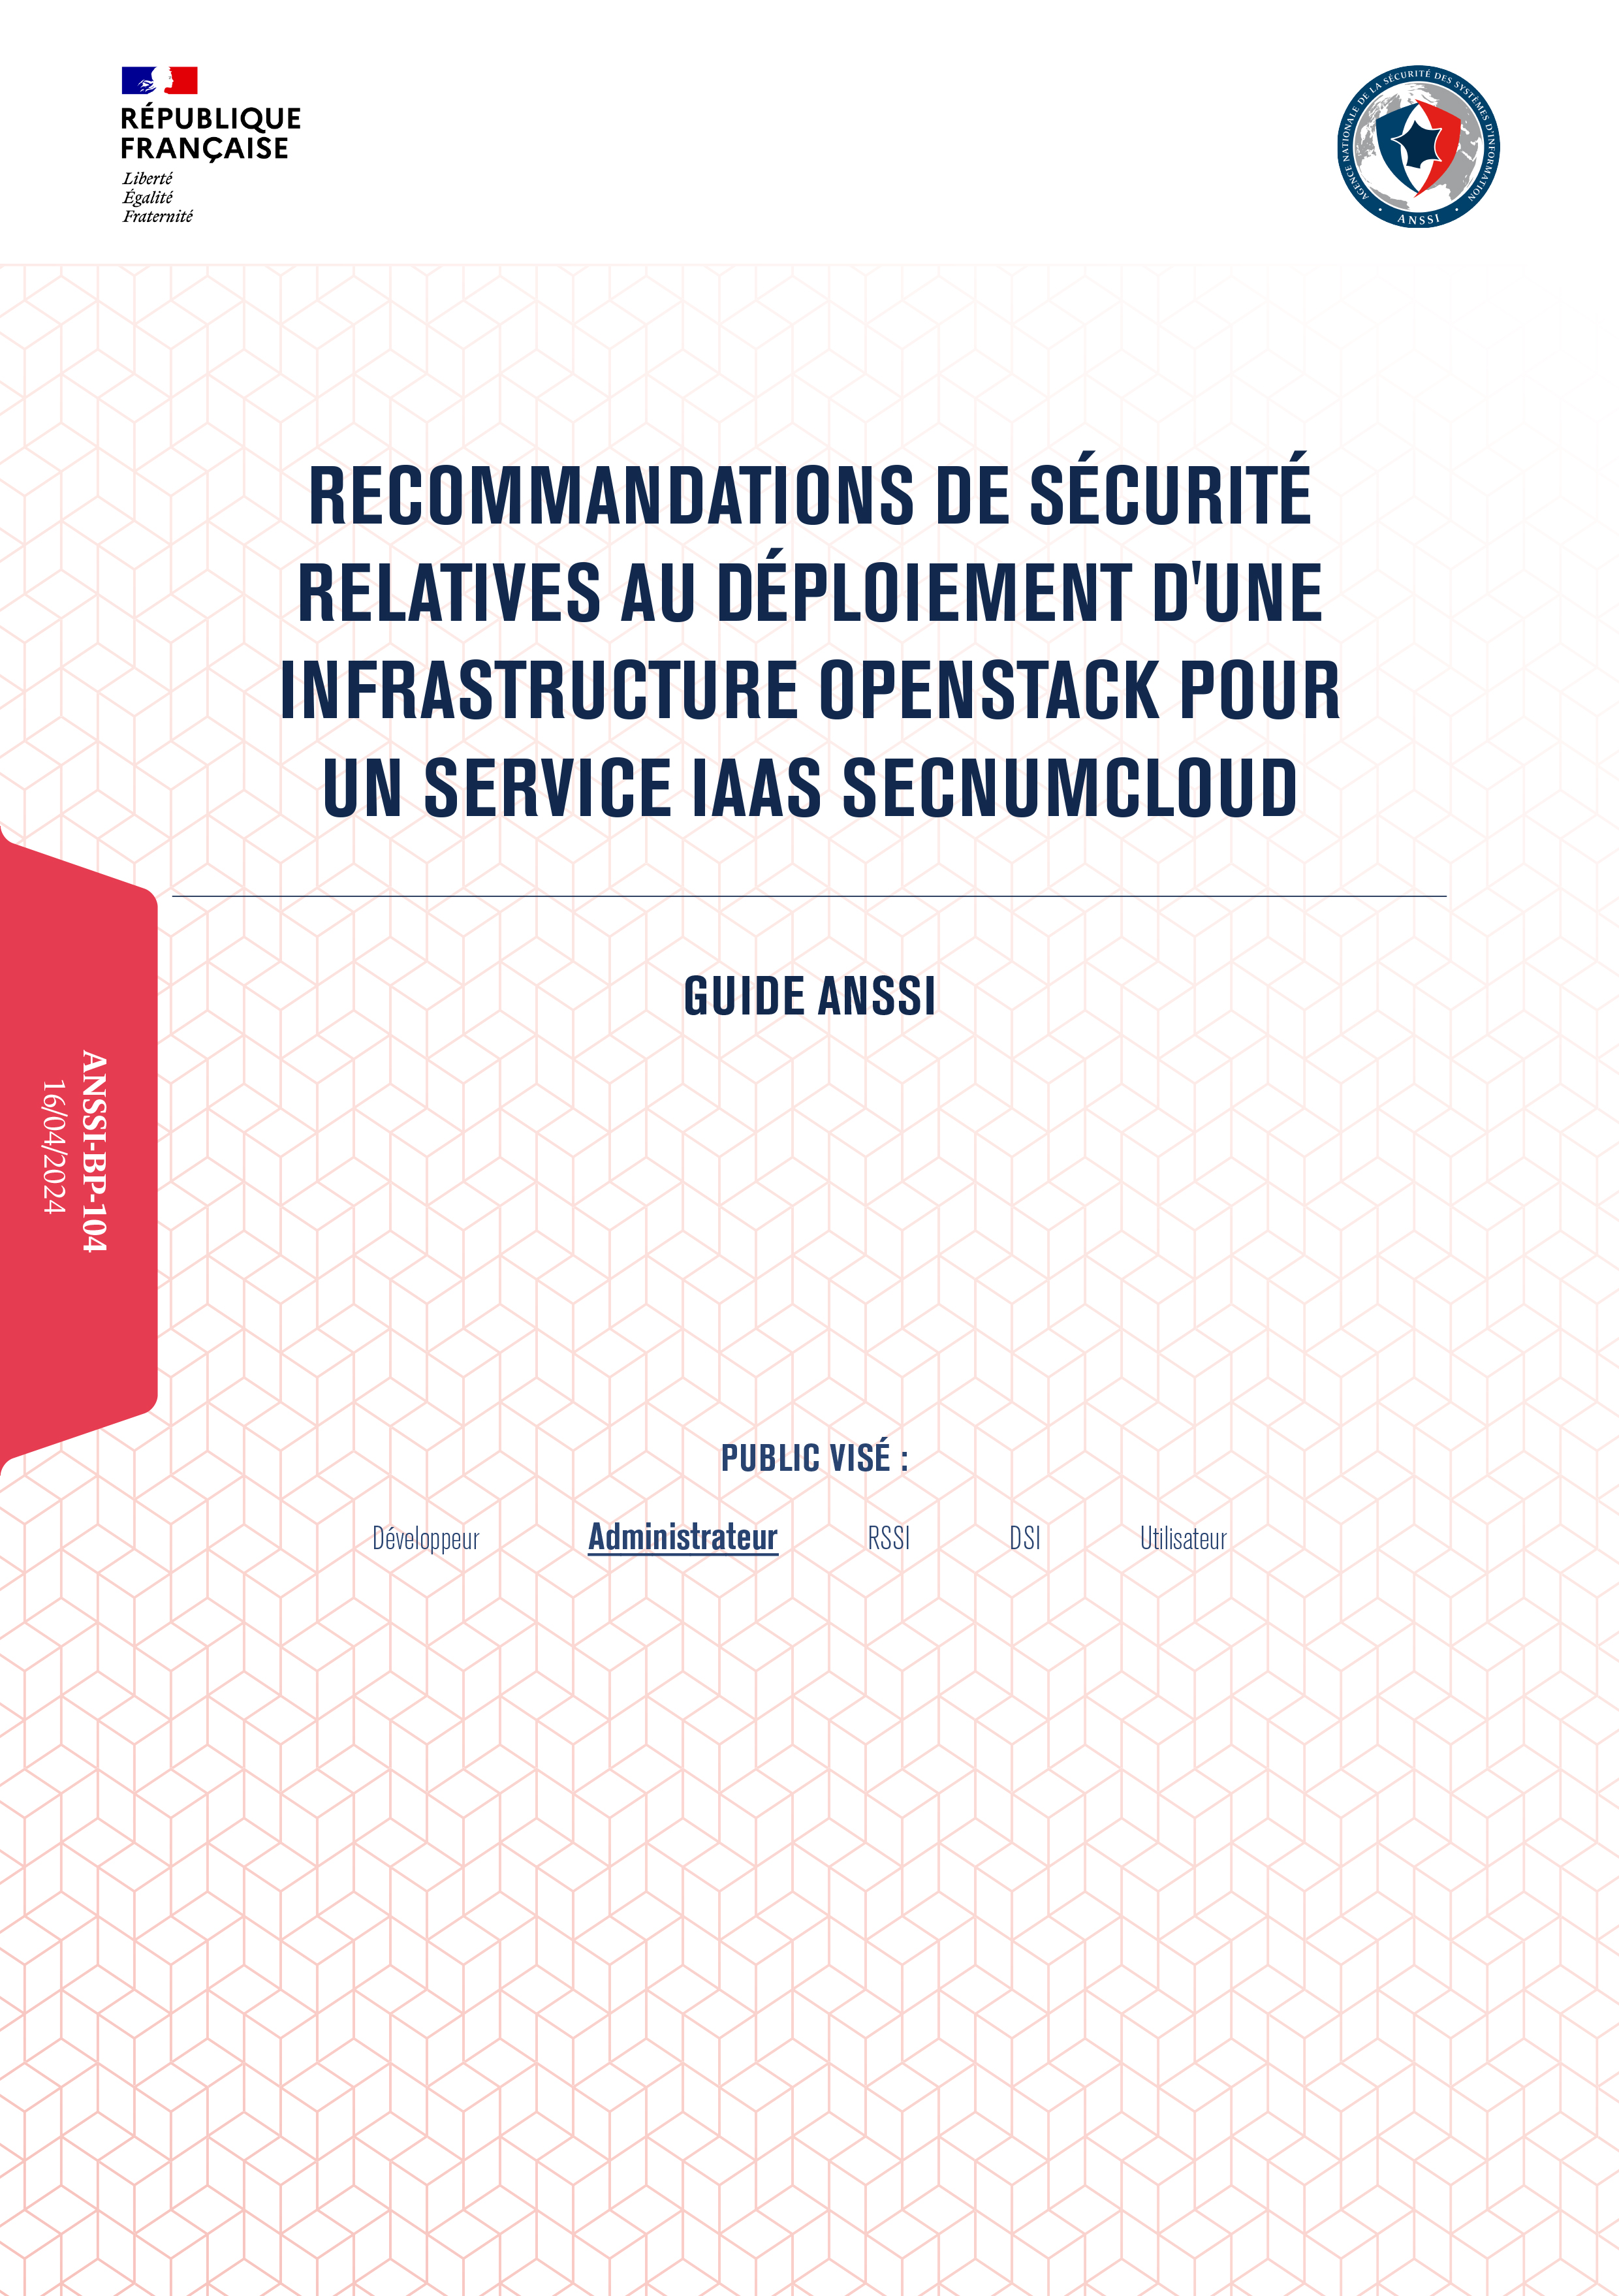 Recommandations de déploiement d'un service IAAS OpenStack SecNumCloud